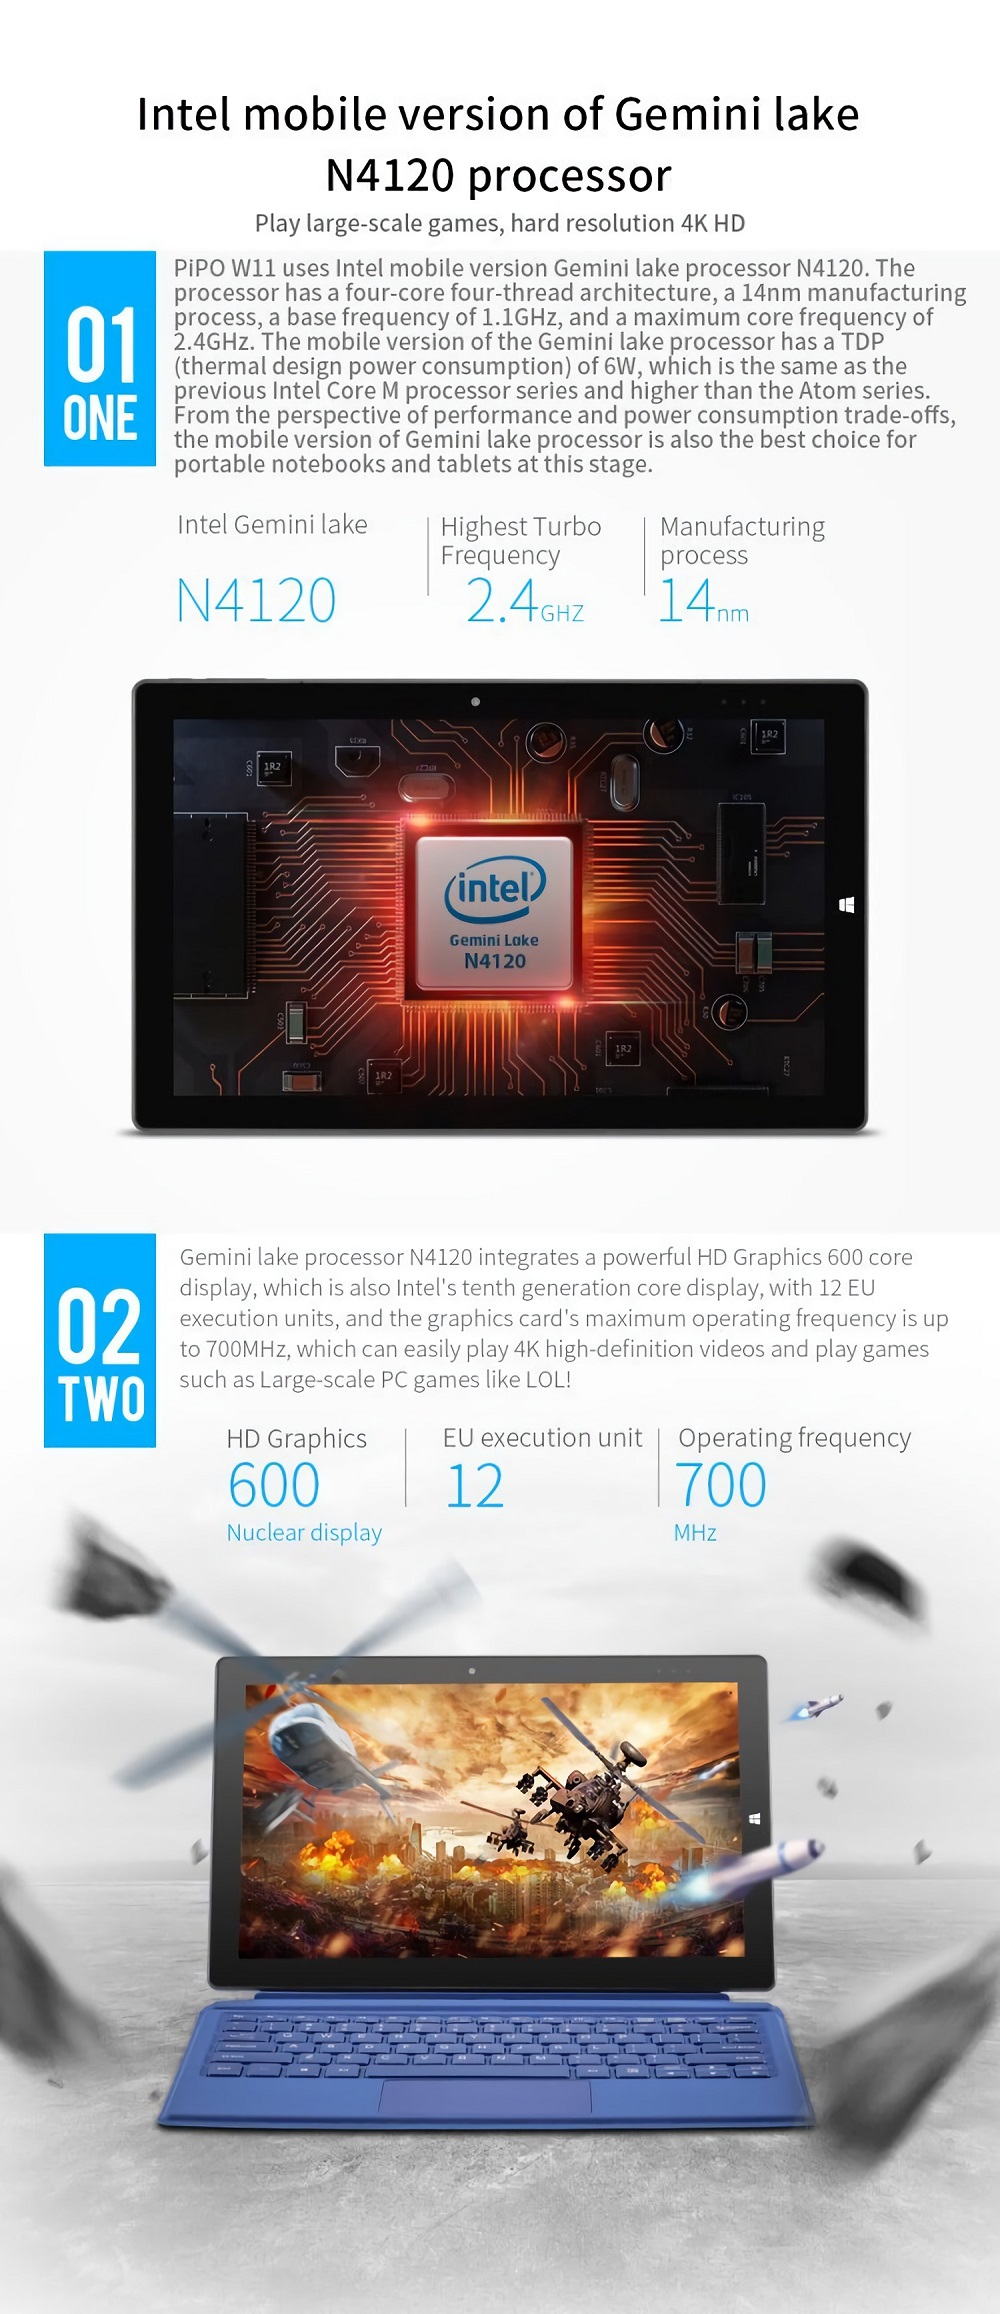 PIPO W11 Intel Gemini Lake N4120 8GB RAM 128GB ROM 11.6 Inch Windows 10 Tablet with Keyboard Stylus Pen 13